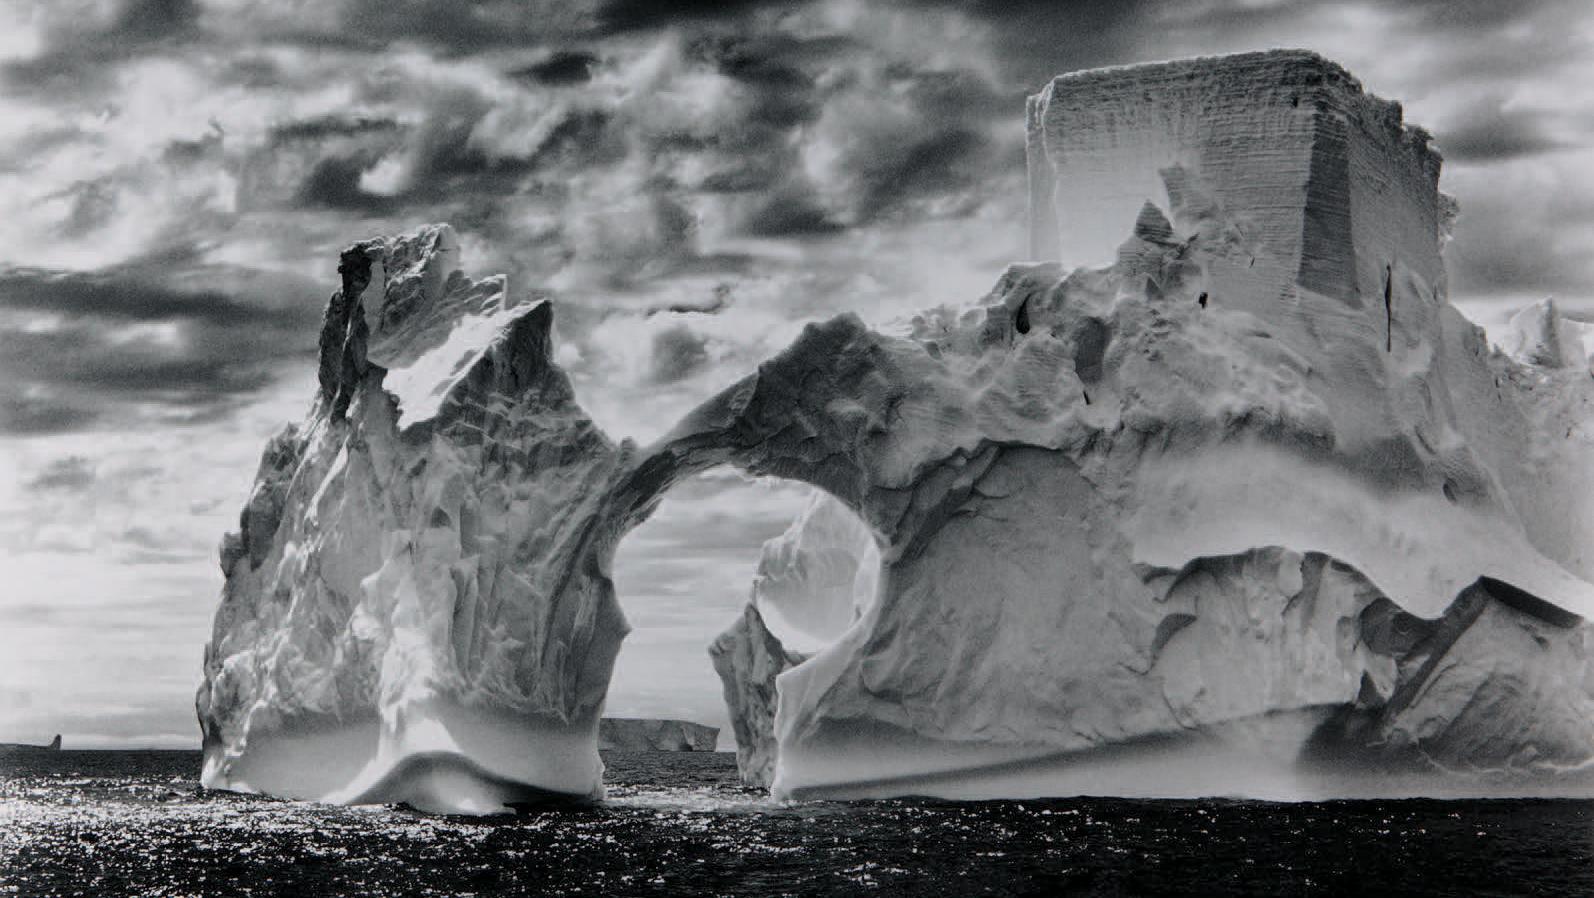 Sebastião Salgado (né en 1944), Iceberg, Antartica, 2005, tirage argentique d’époque,... Regard militant